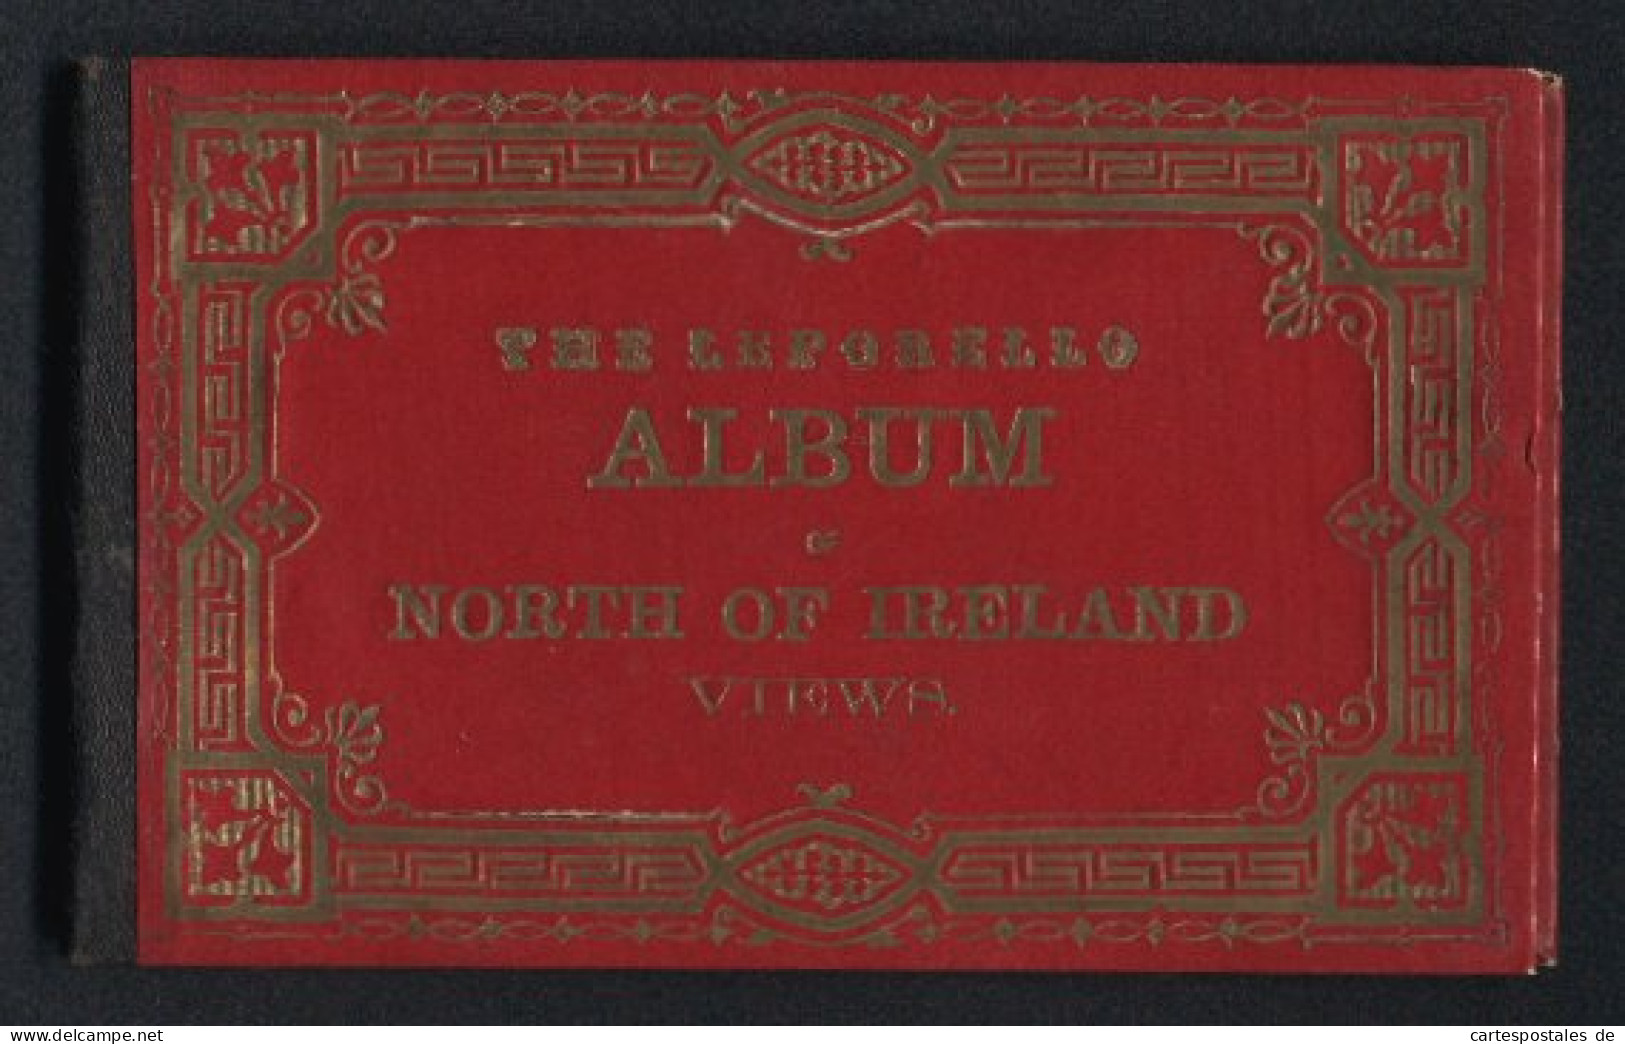 Leporello-Album North Of Ireland, 12 Lithographie-Ansichten, Belfast, Londonderry, Giant Causeway, Dunluc Castle, Antr  - Litografía